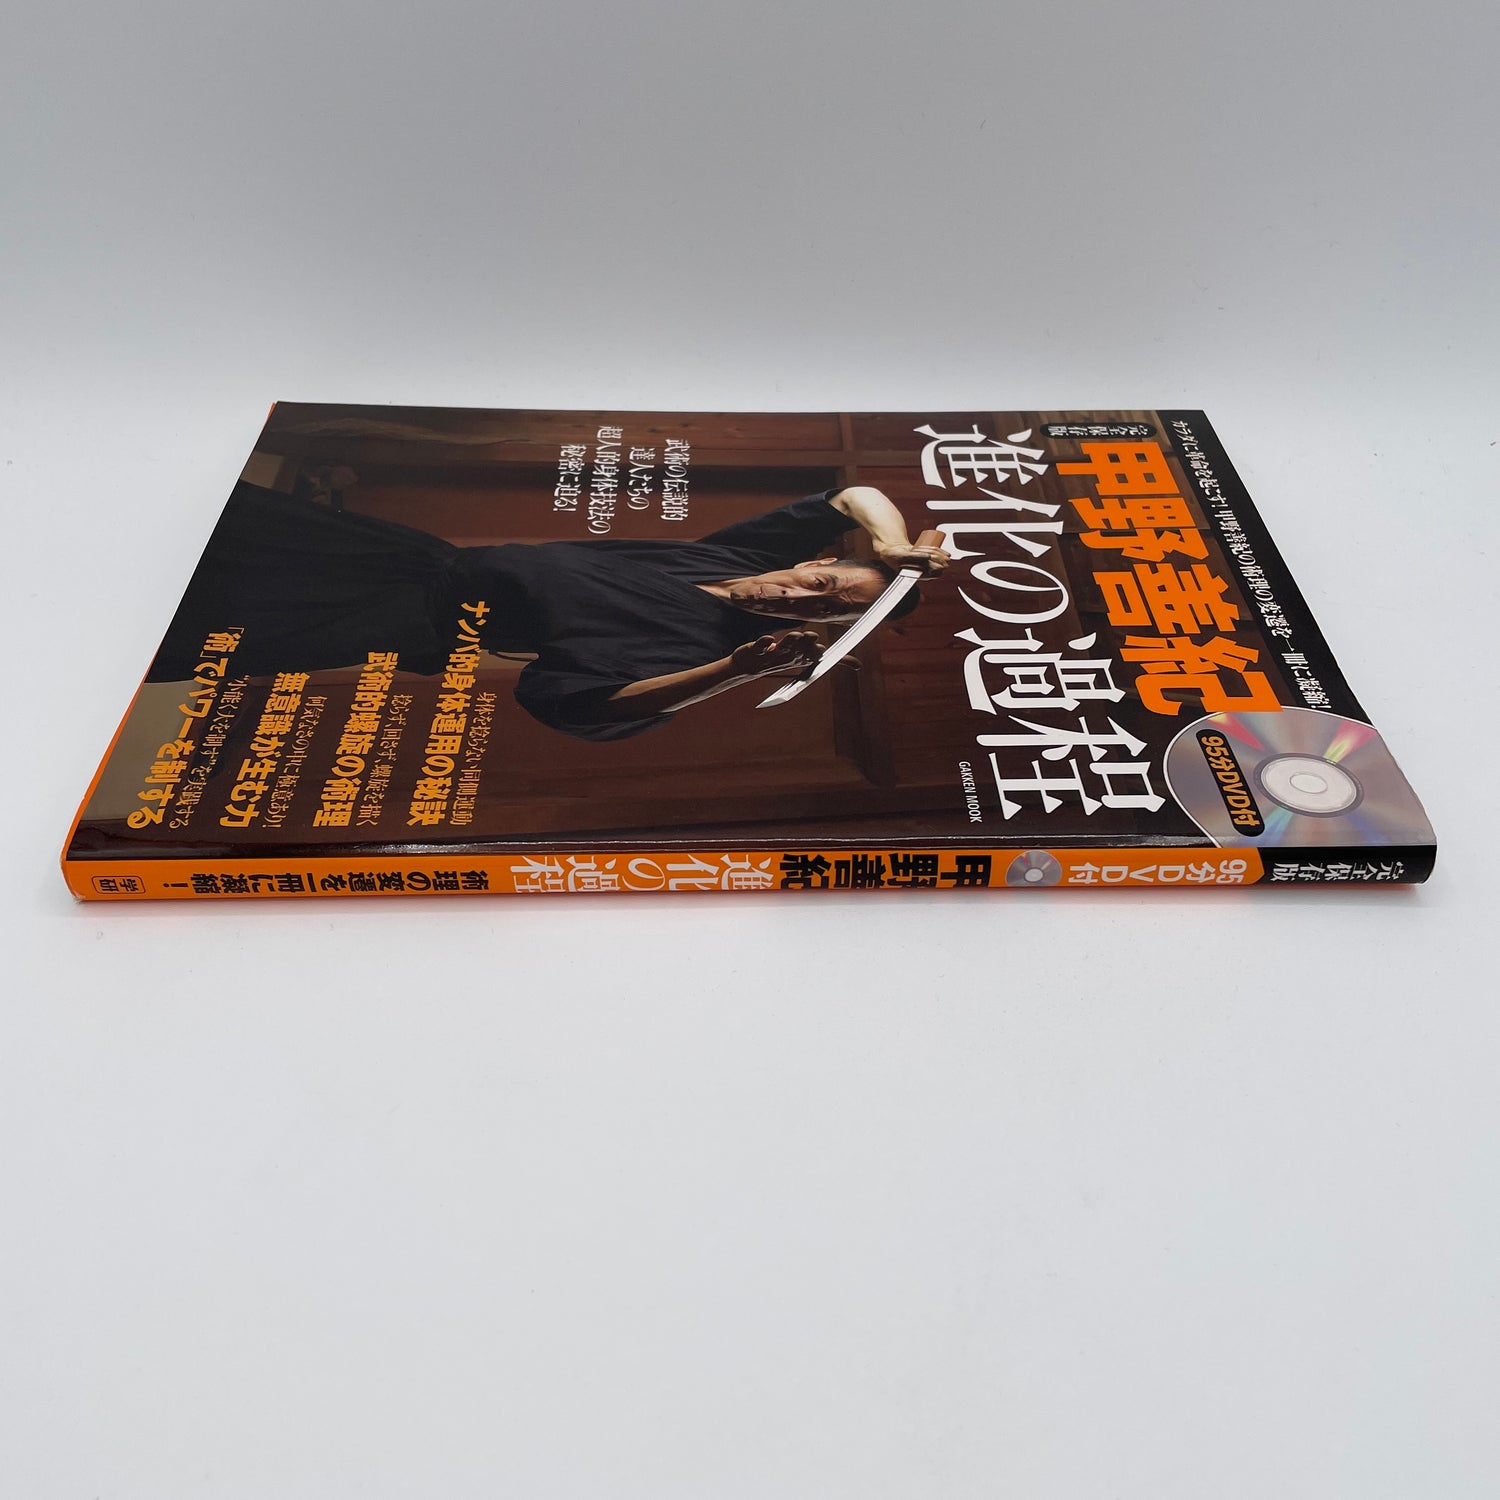 El proceso evolutivo de Yoshinori Kono Libro y DVD